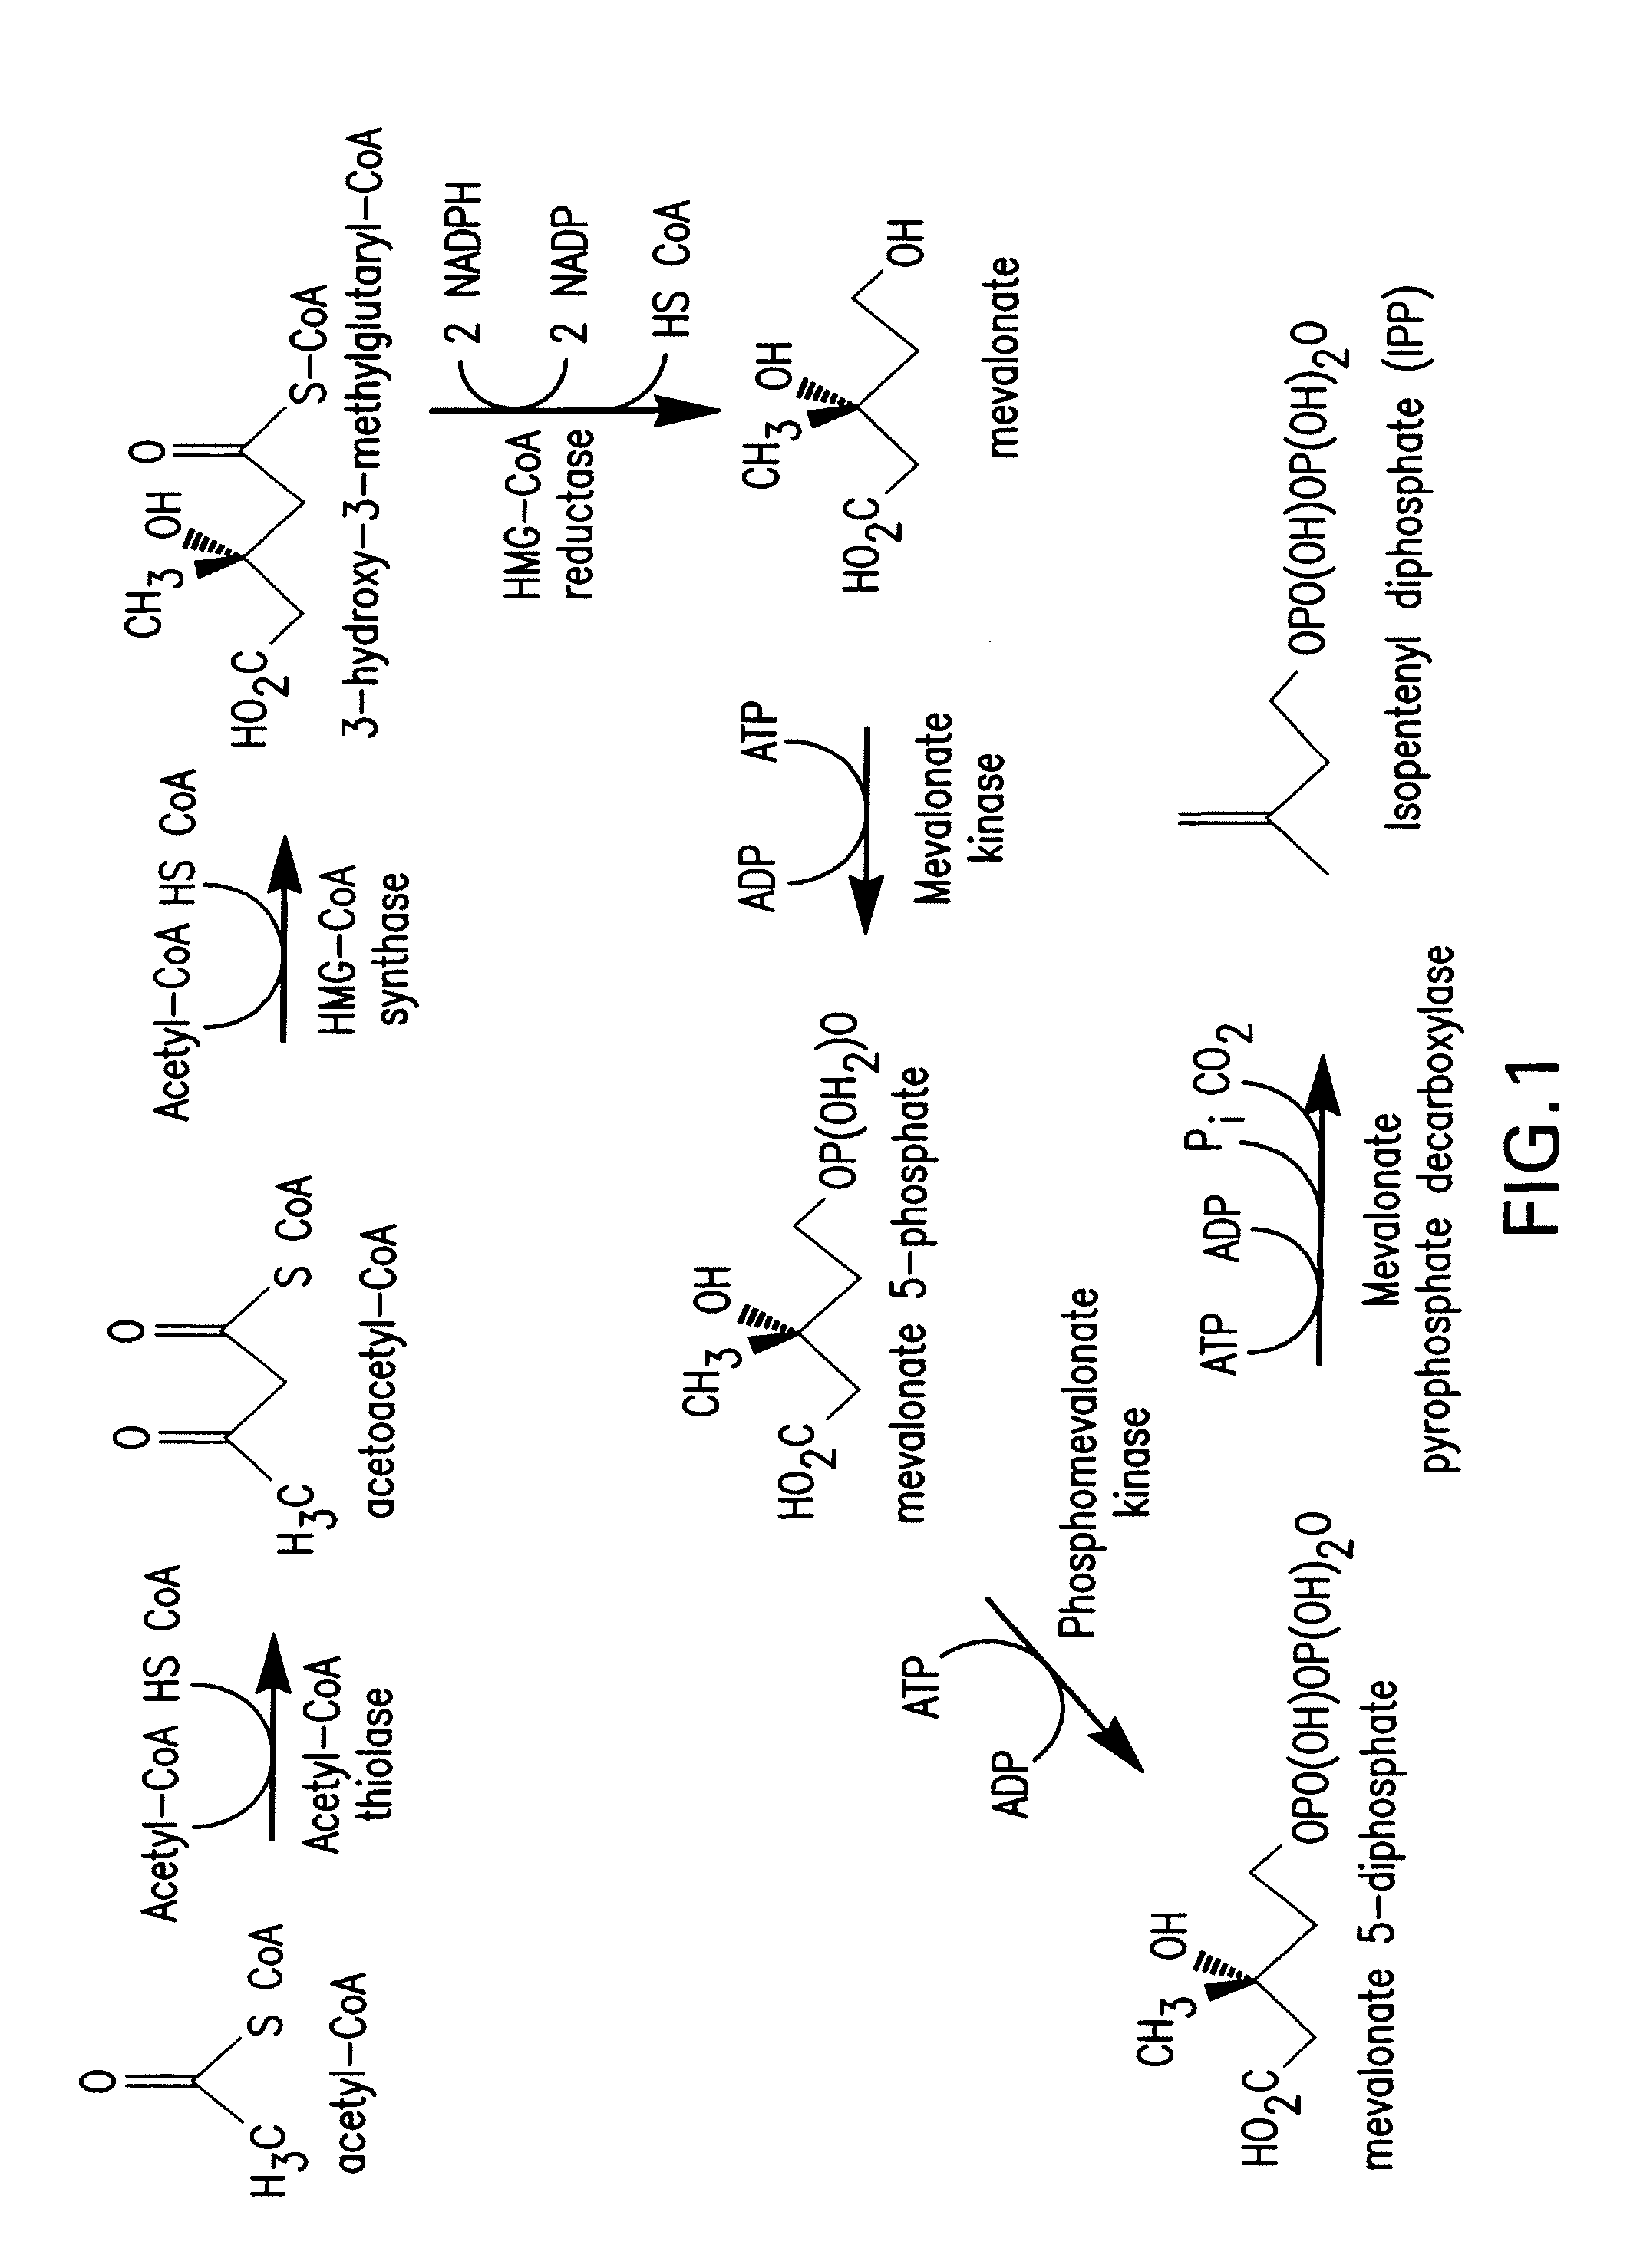 Production of isoprenoids